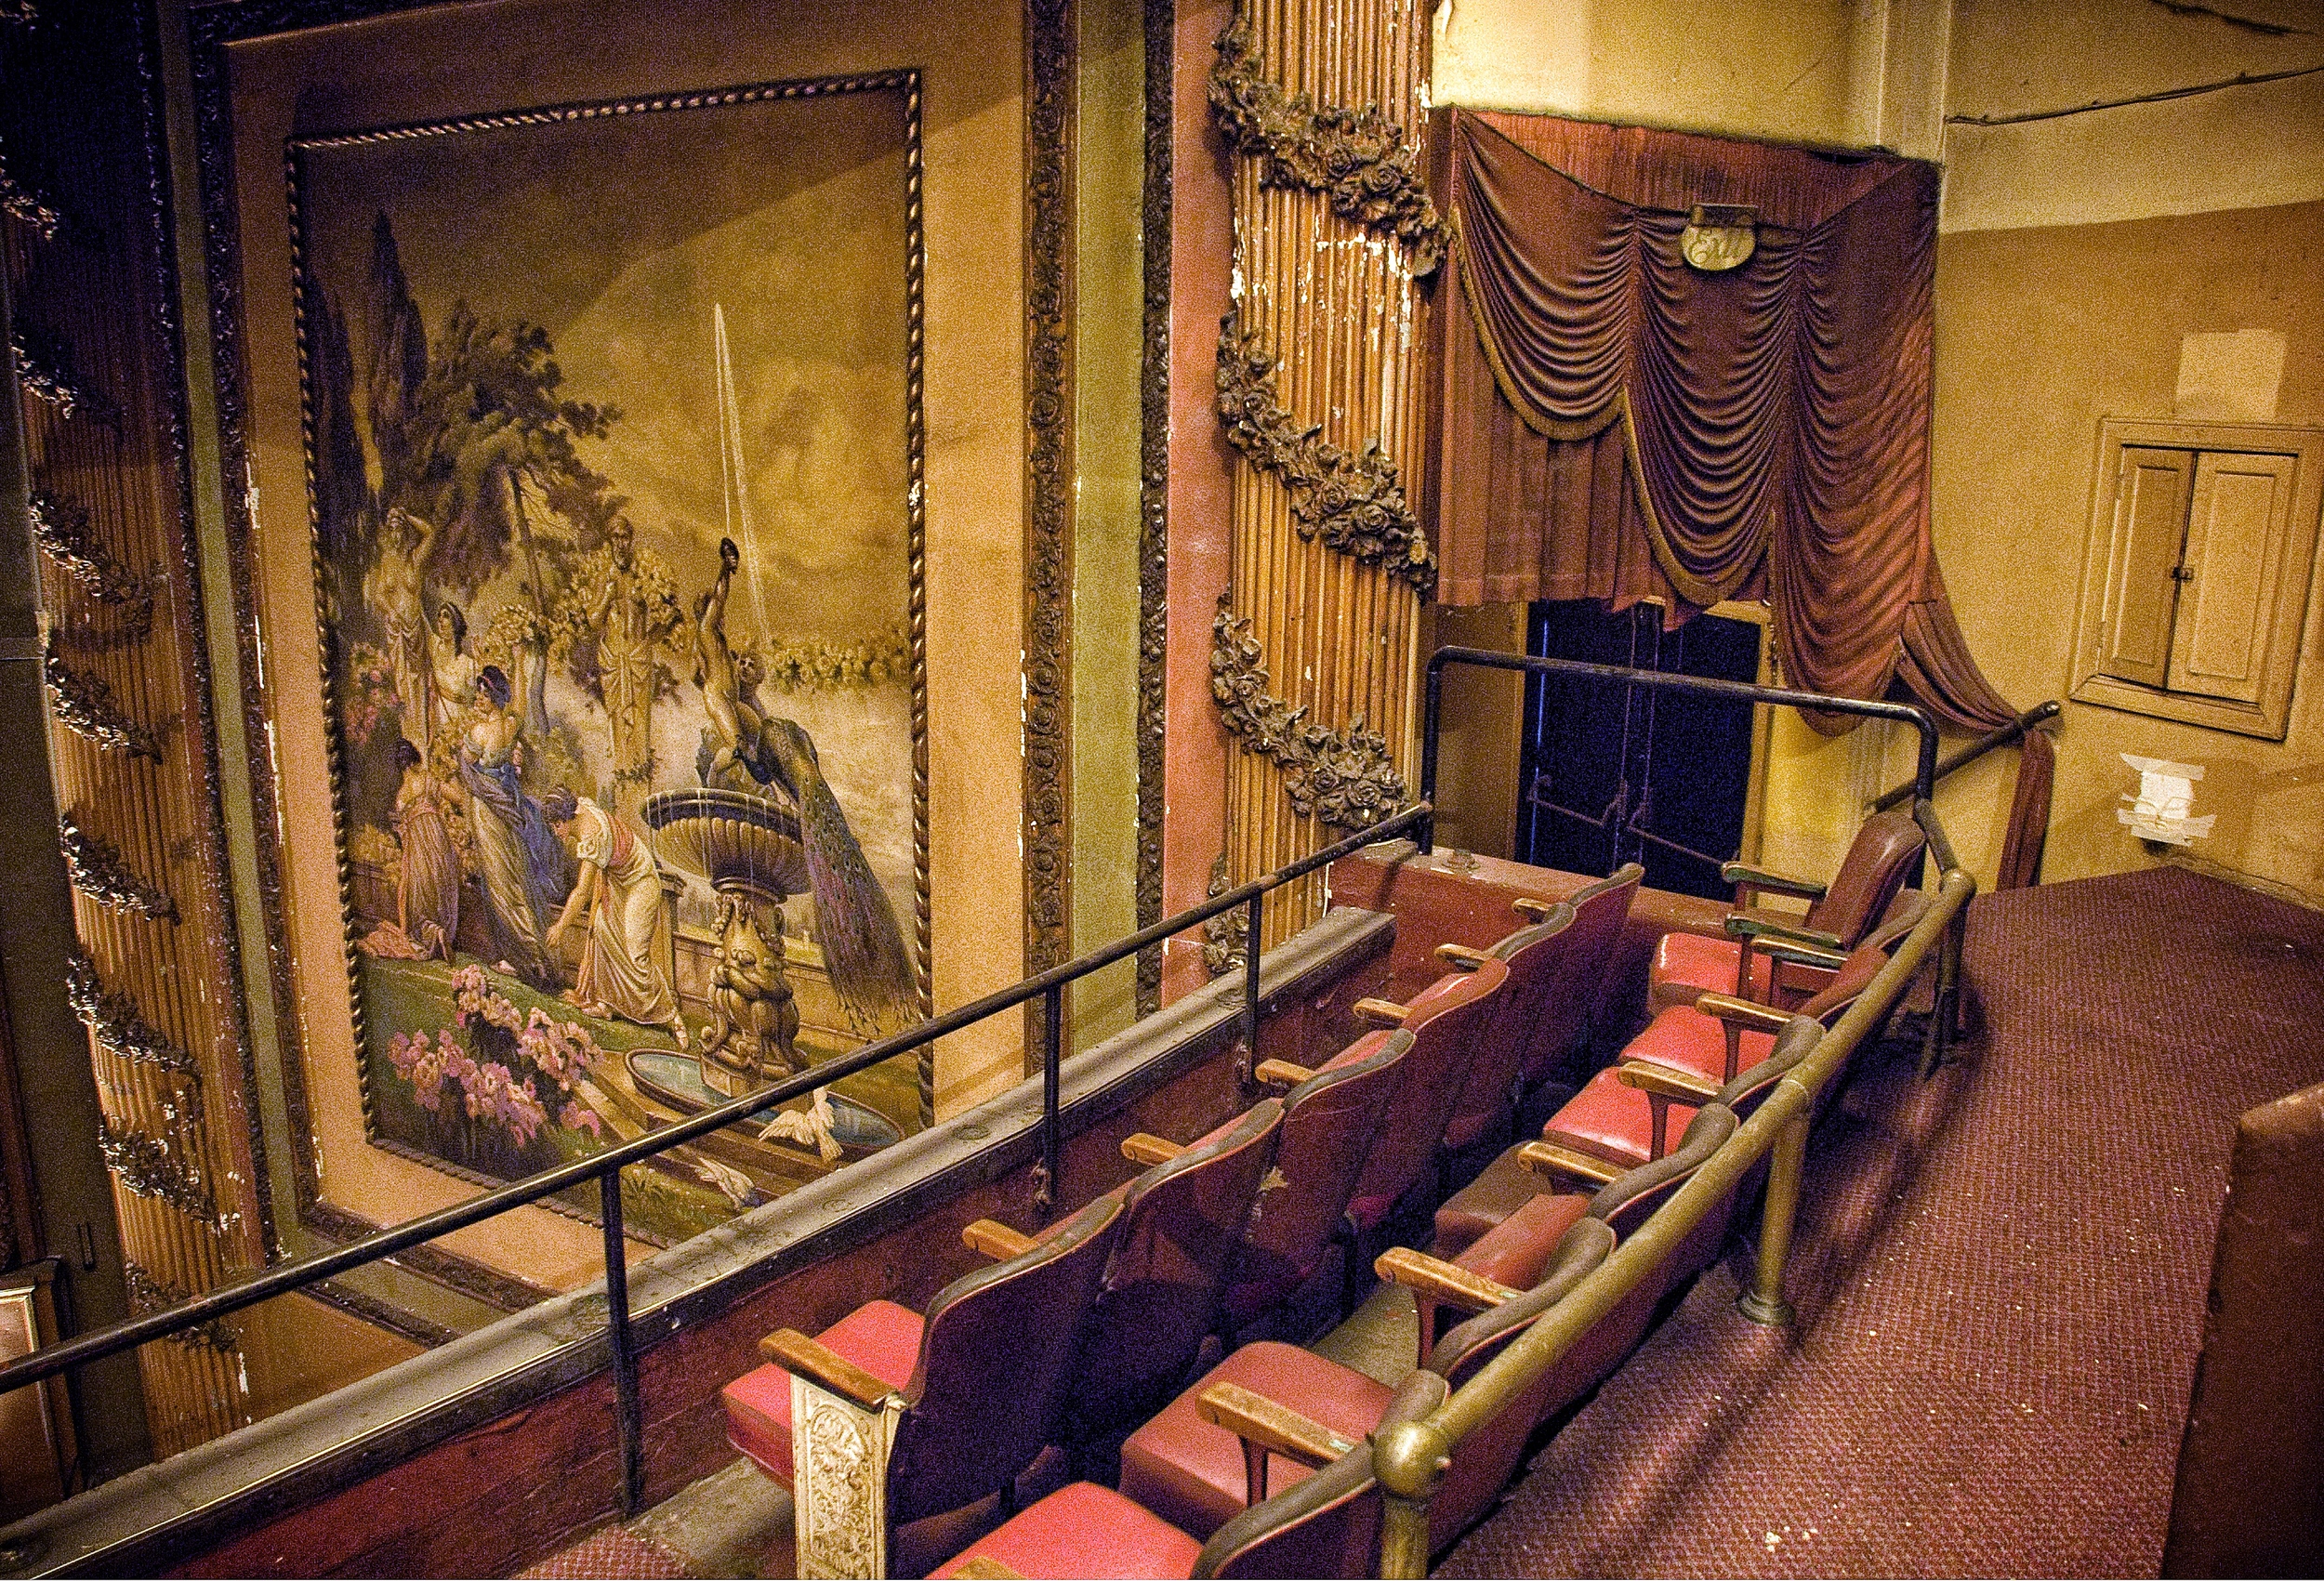  Palace Theater interior 